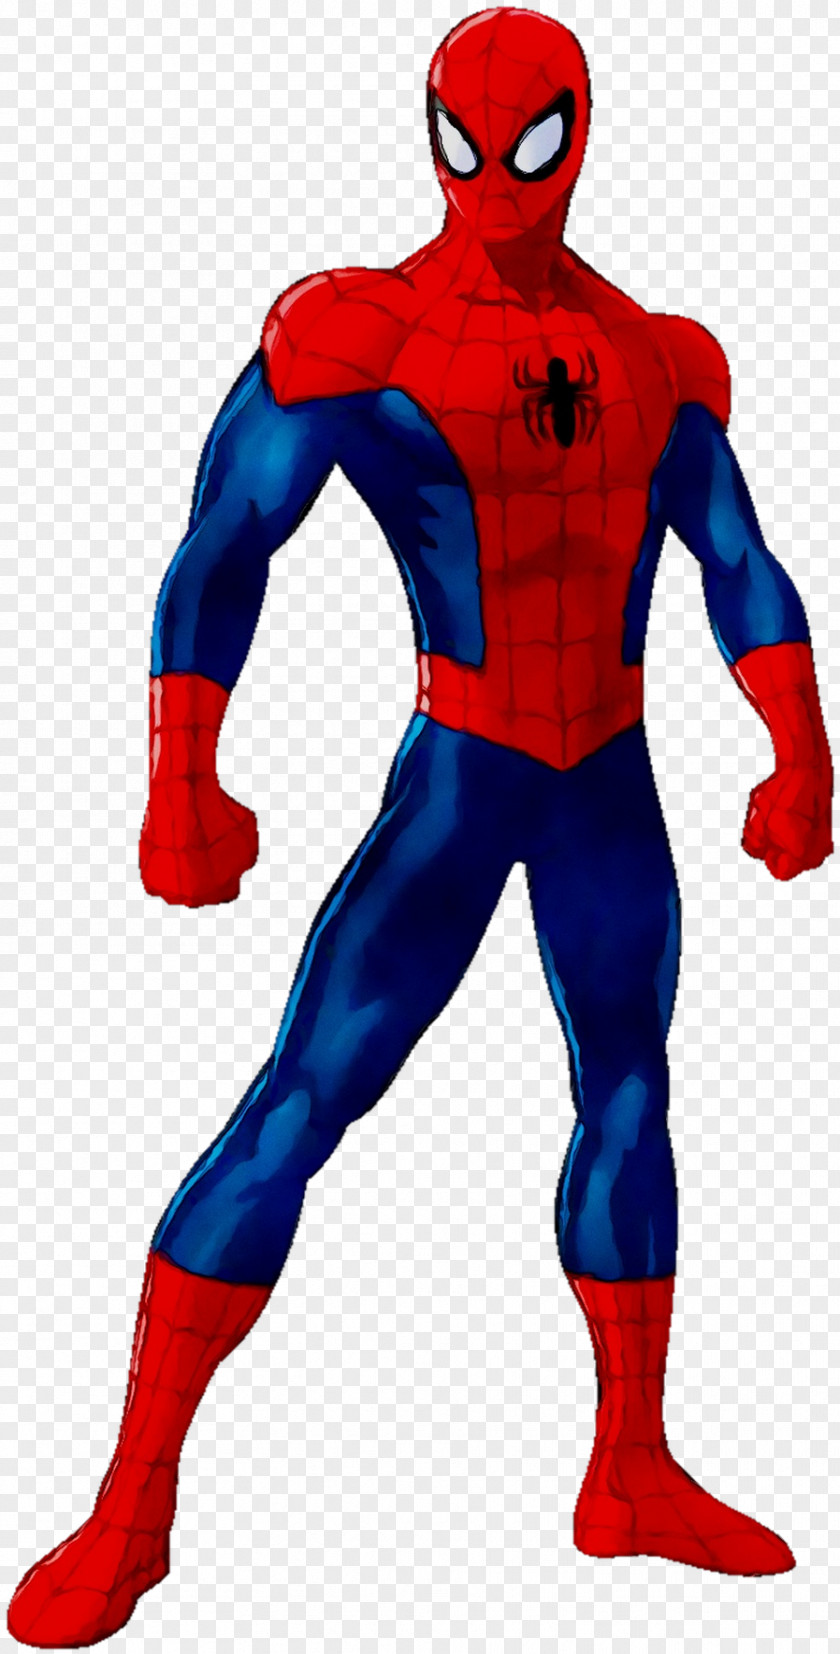 Spider-Man Captain America Coloring Book Superhero Film PNG